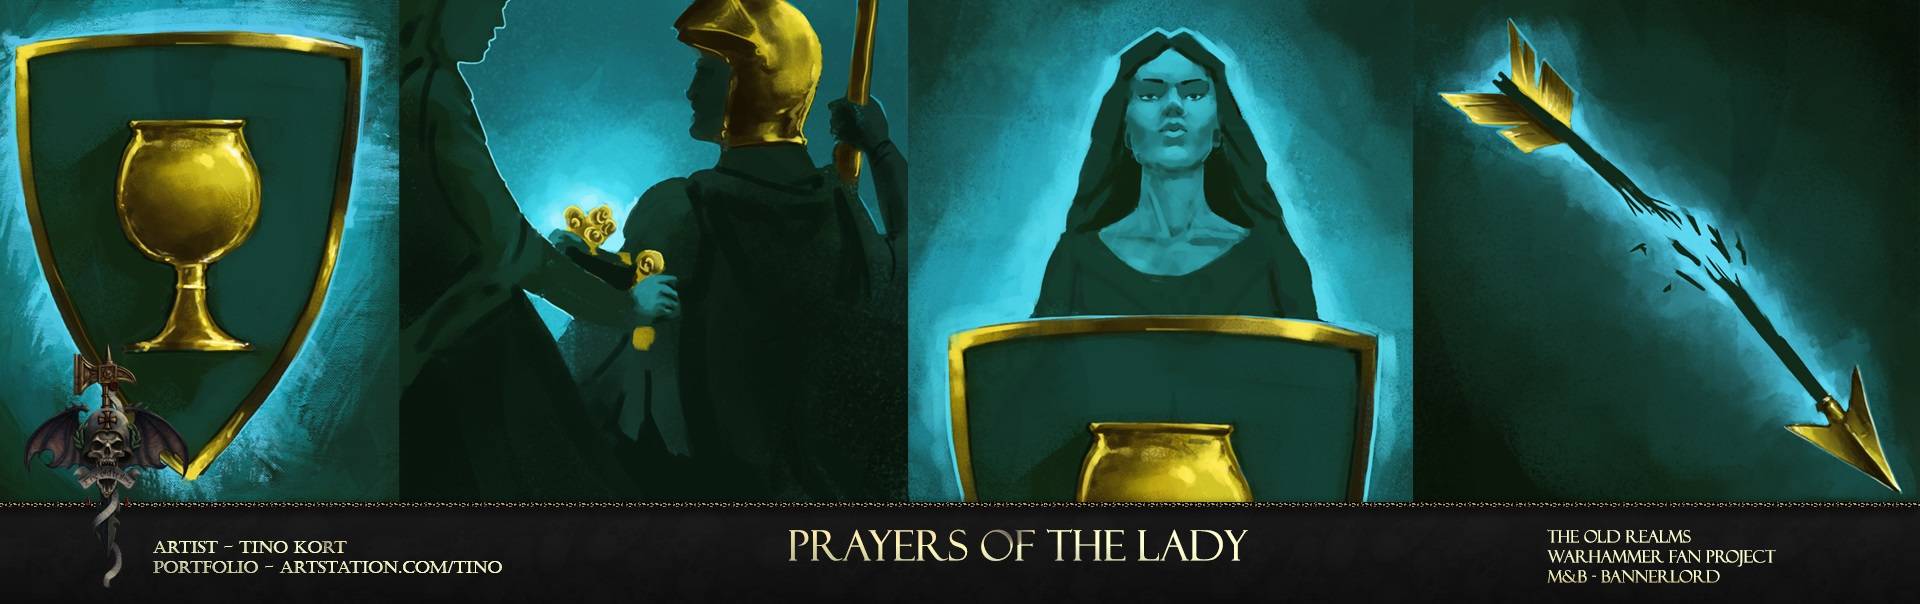 prayers_of_the_lady.jpg